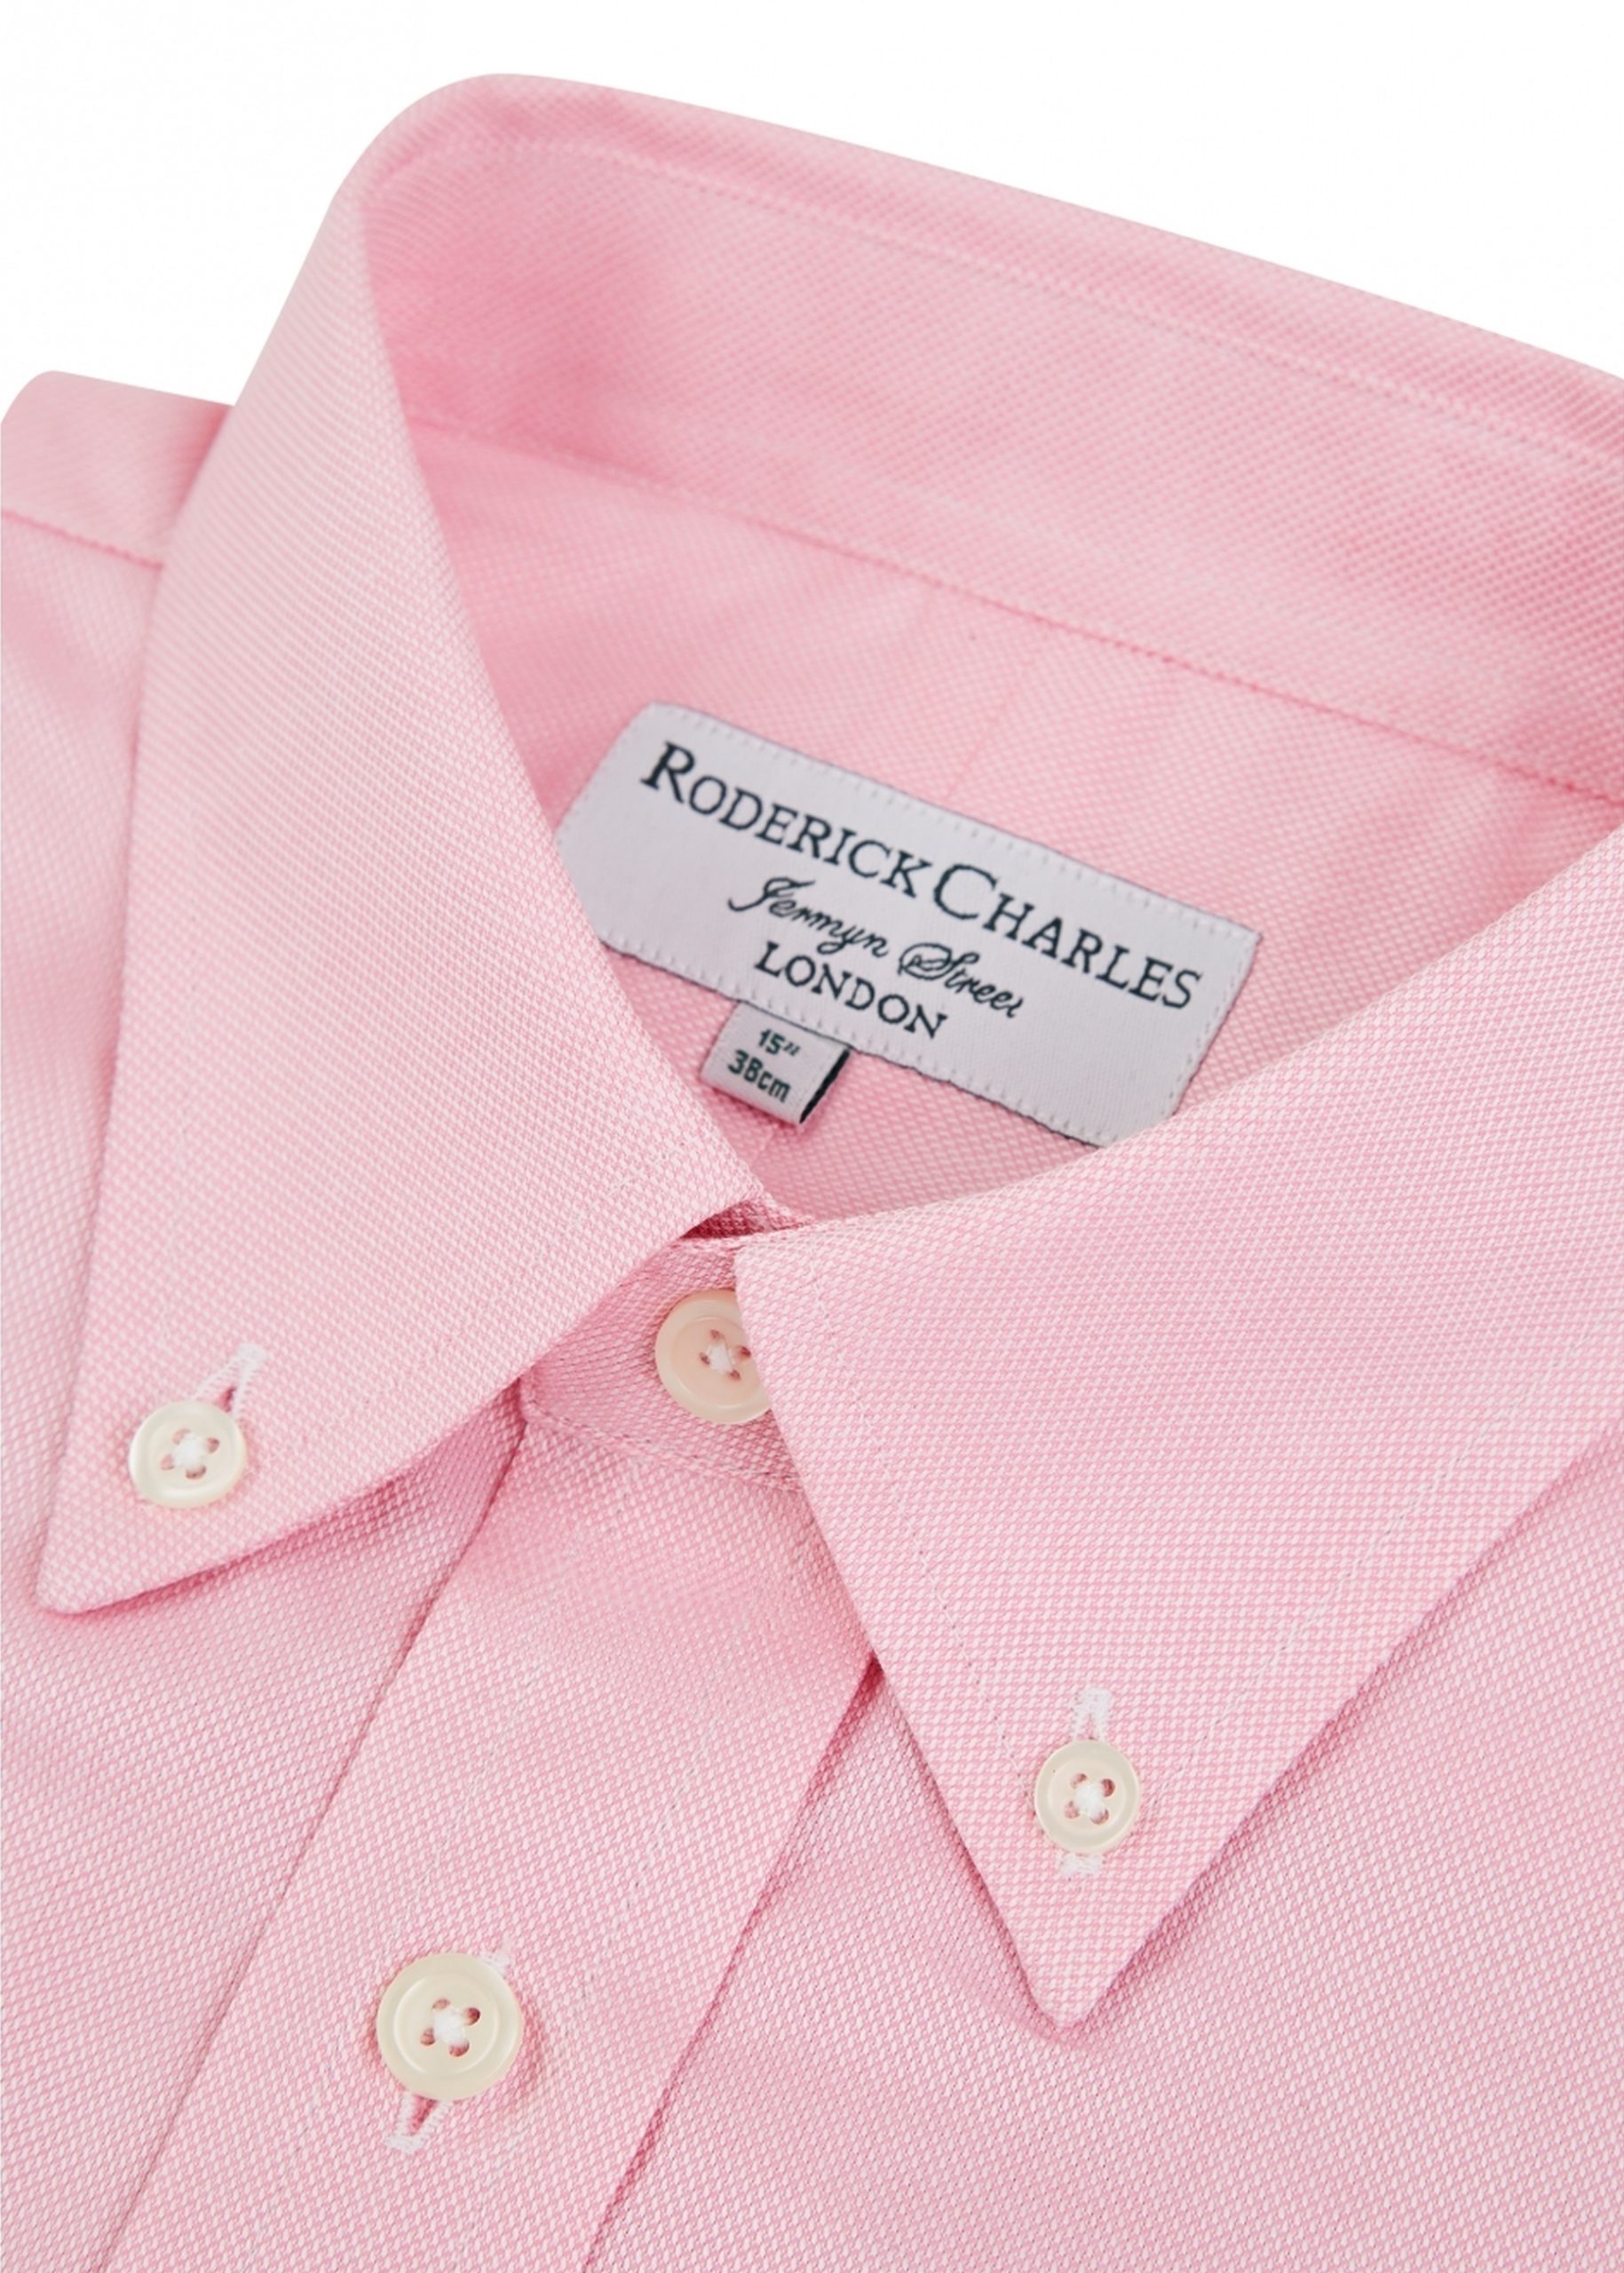 Roderick Charles pink single cuff shirt